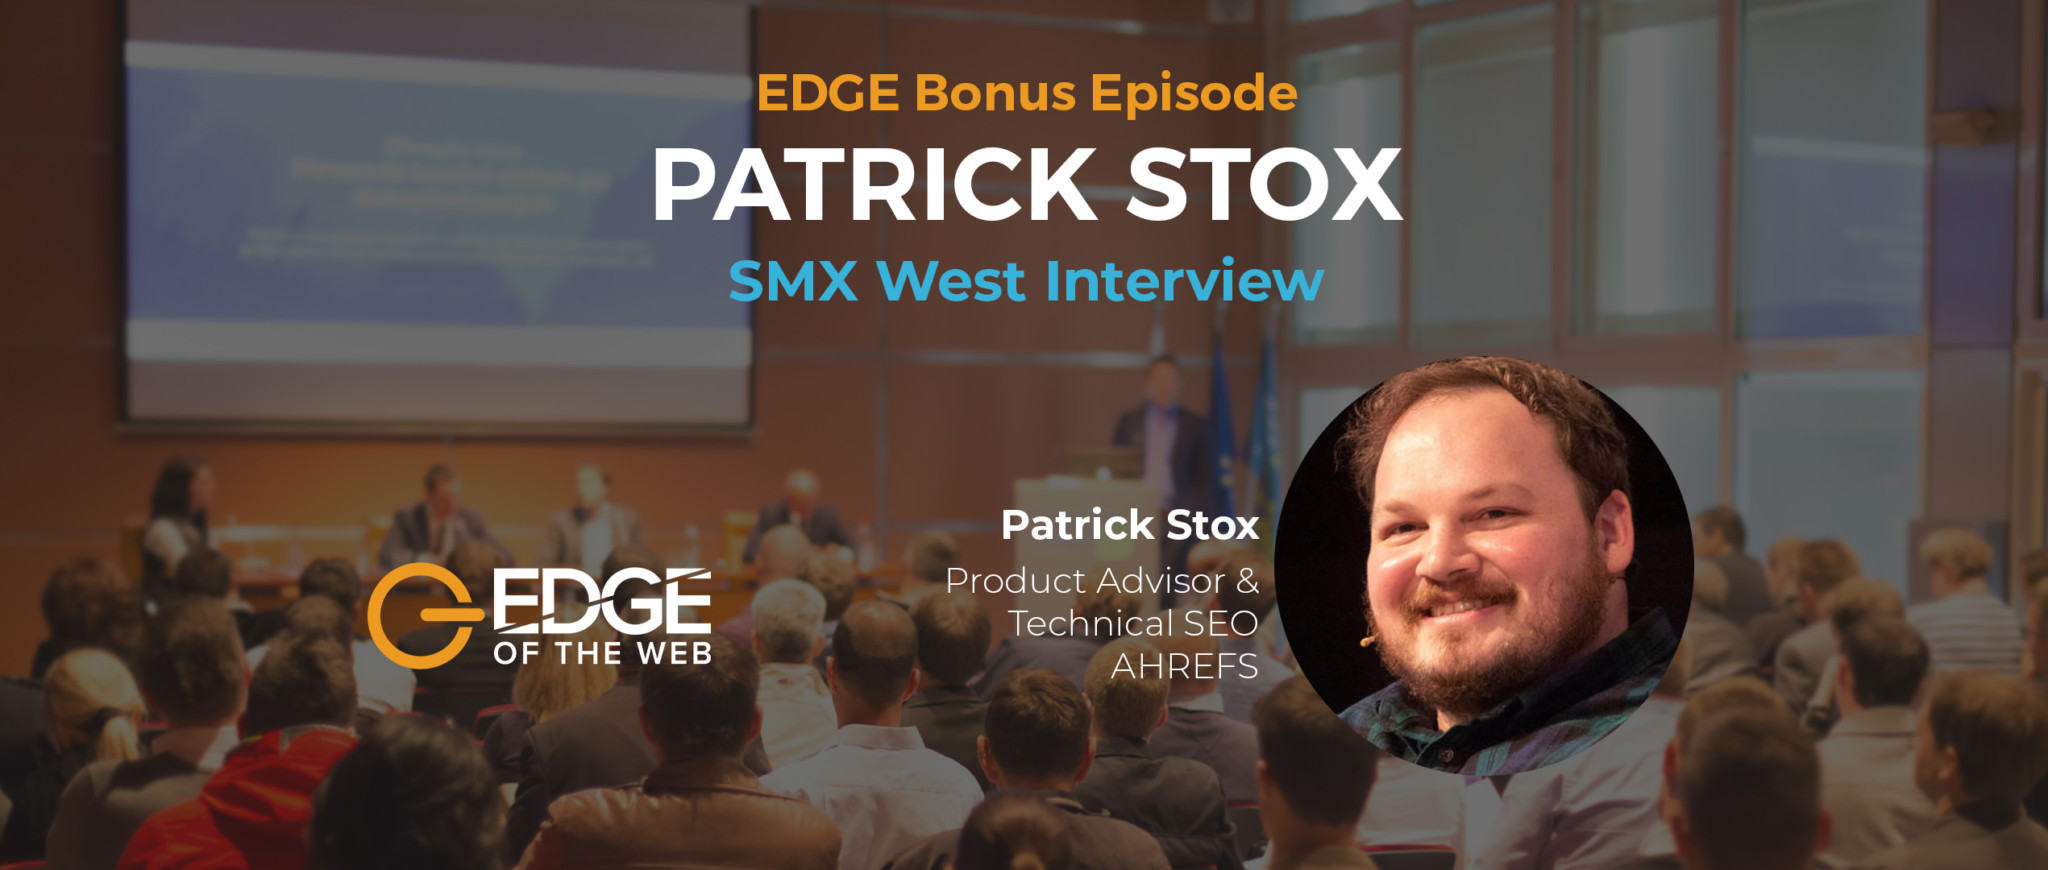 Patrick Stox SMX EDGE Bonus Interview Featured Image